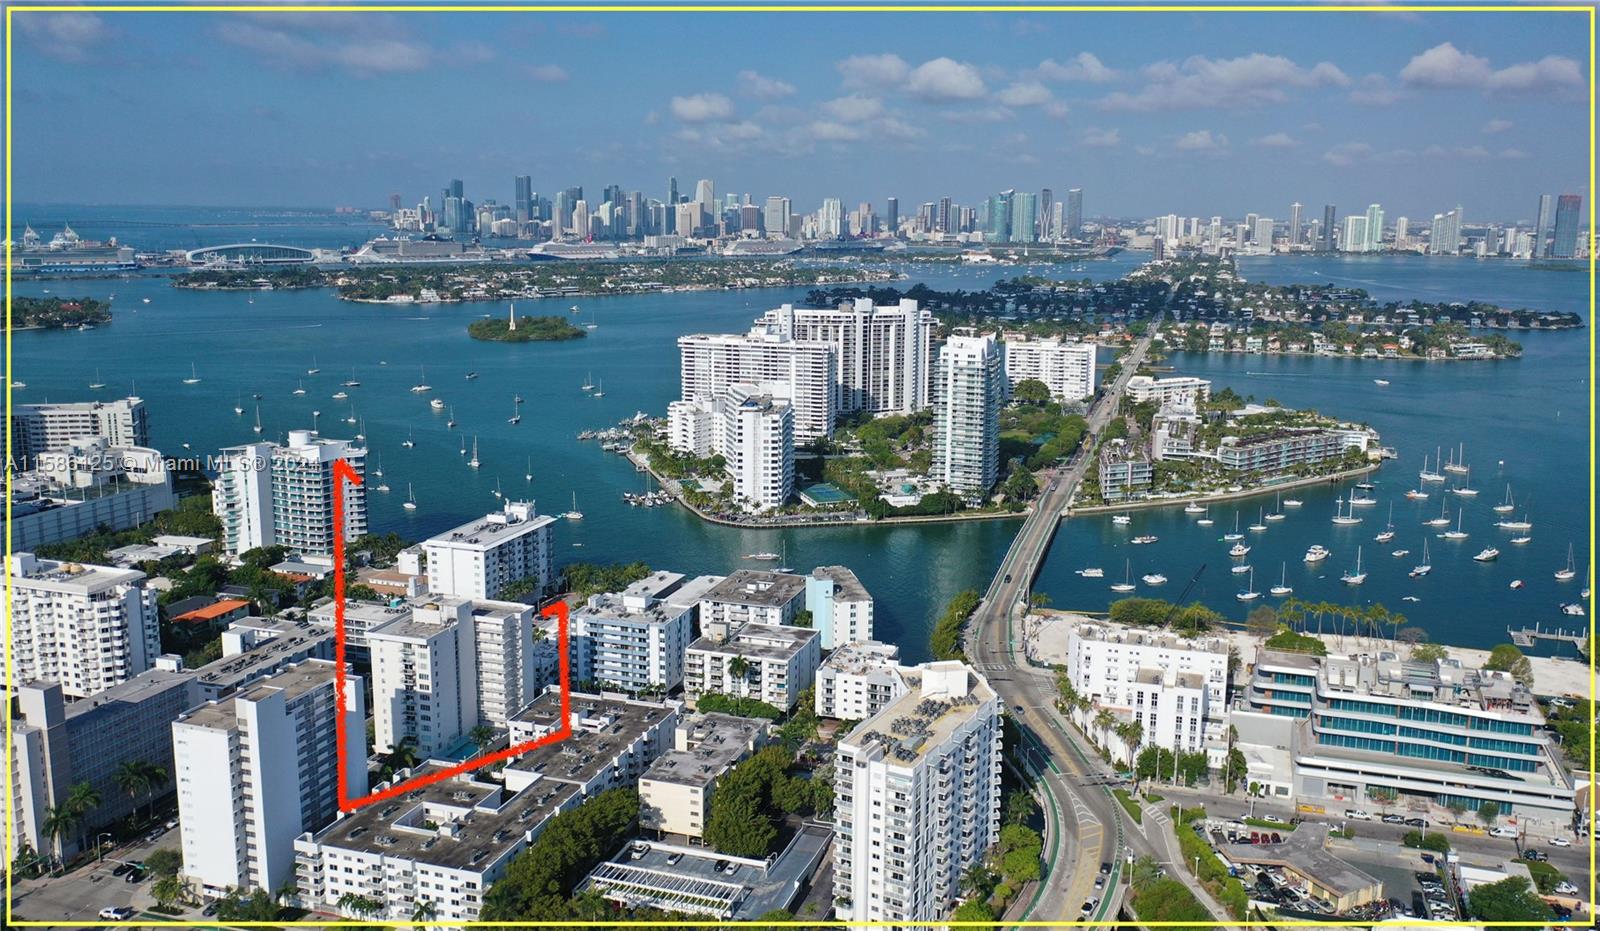 Property for Sale at 1345 Lincoln Rd 705, Miami Beach, Miami-Dade County, Florida - Bedrooms: 2 
Bathrooms: 2  - $629,000